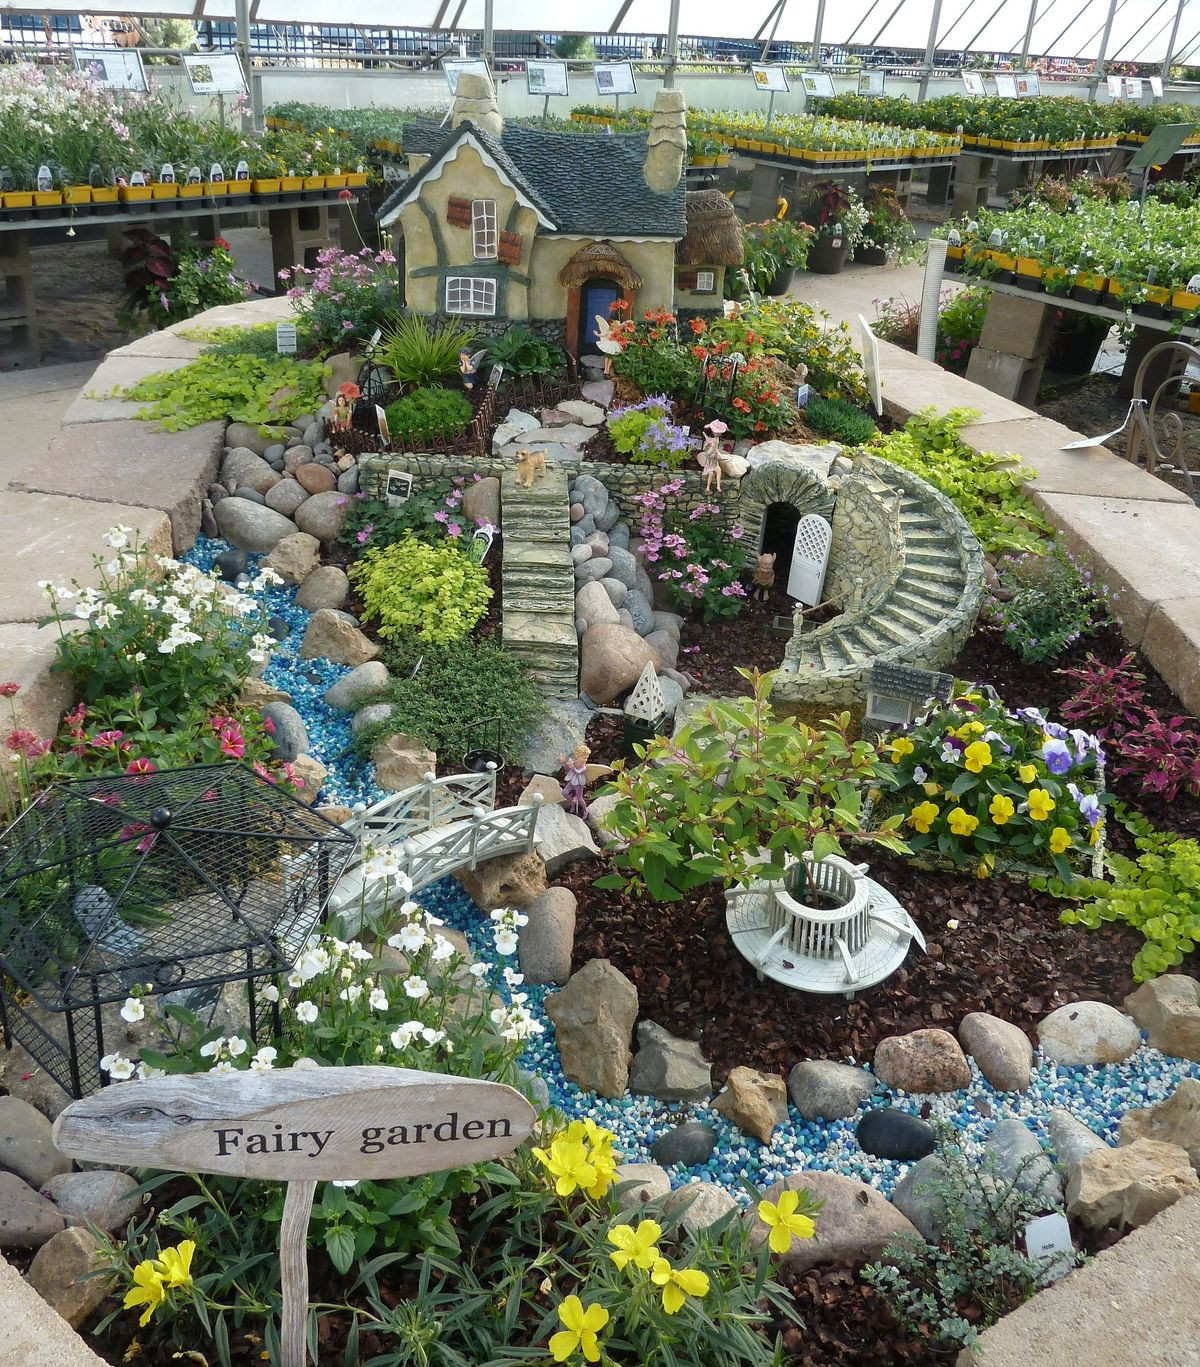 Best ideas about Miniature Fairy Garden Ideas DIY
. Save or Pin The 50 Best DIY Miniature Fairy Garden Ideas in 2019 Now.